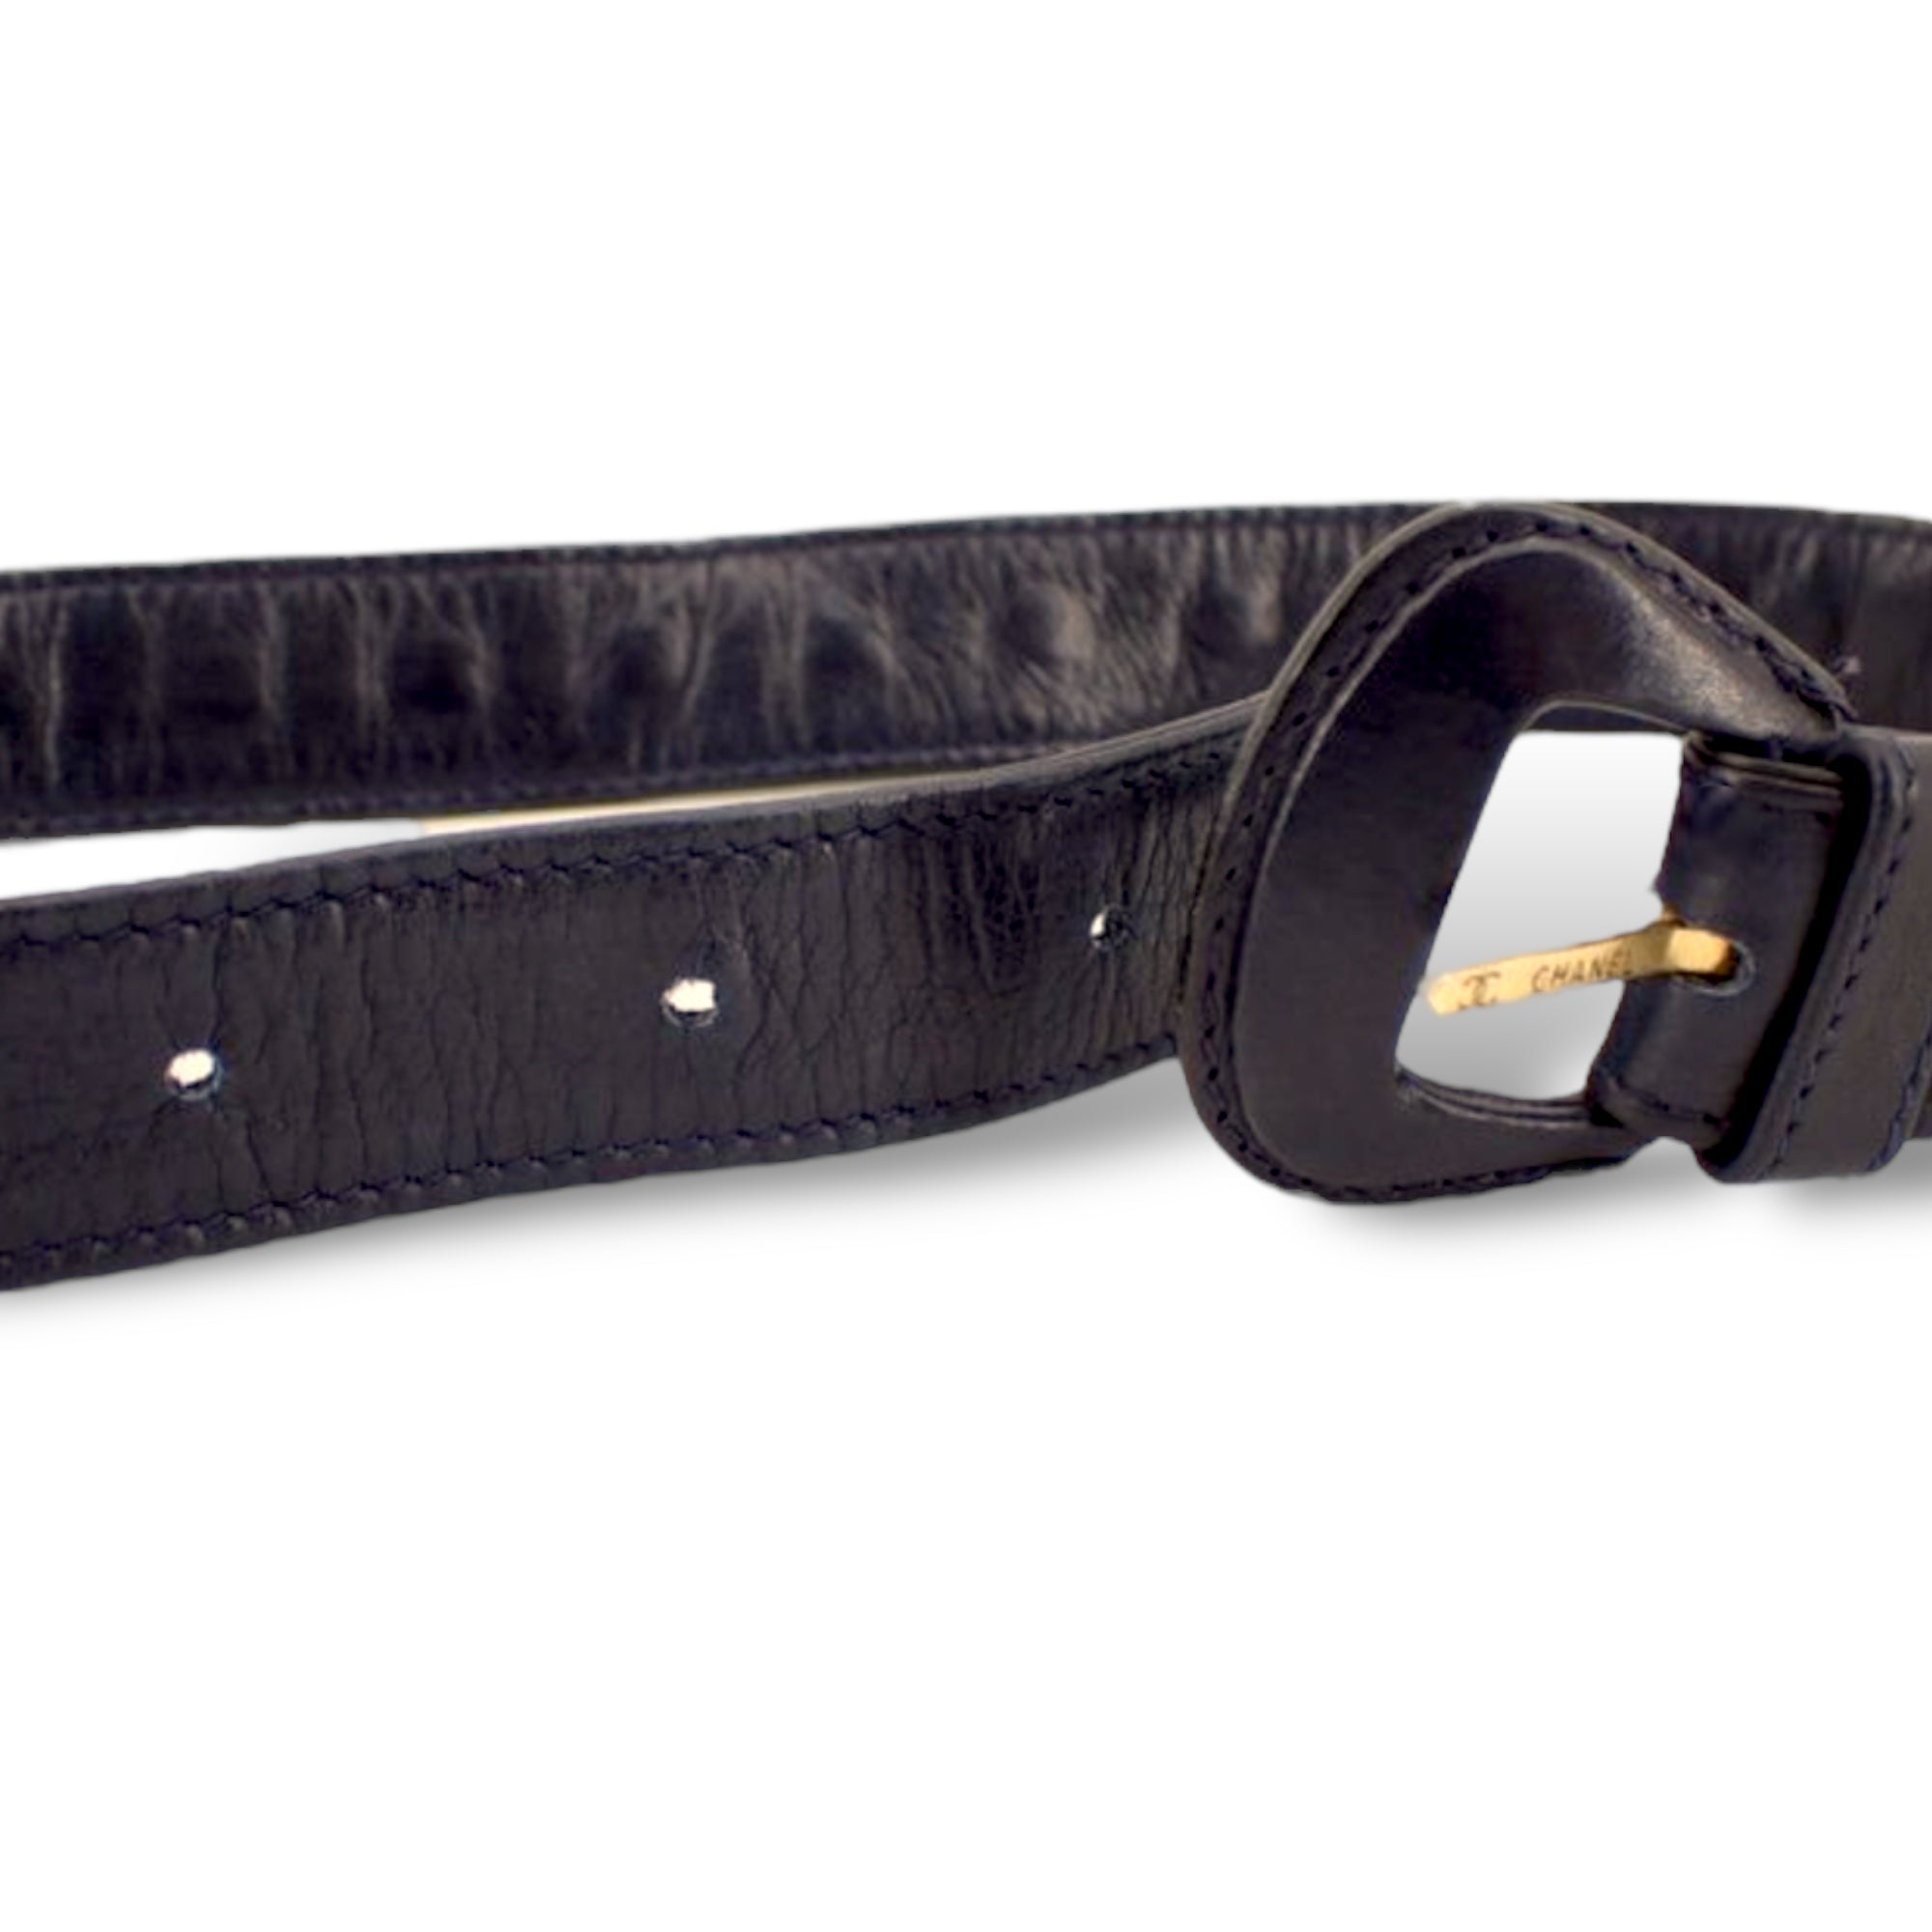 CHANEL Gold Plated Chainlink Motif Vintage Belt in Dark Navy Blue Leather |Size: 65/26|